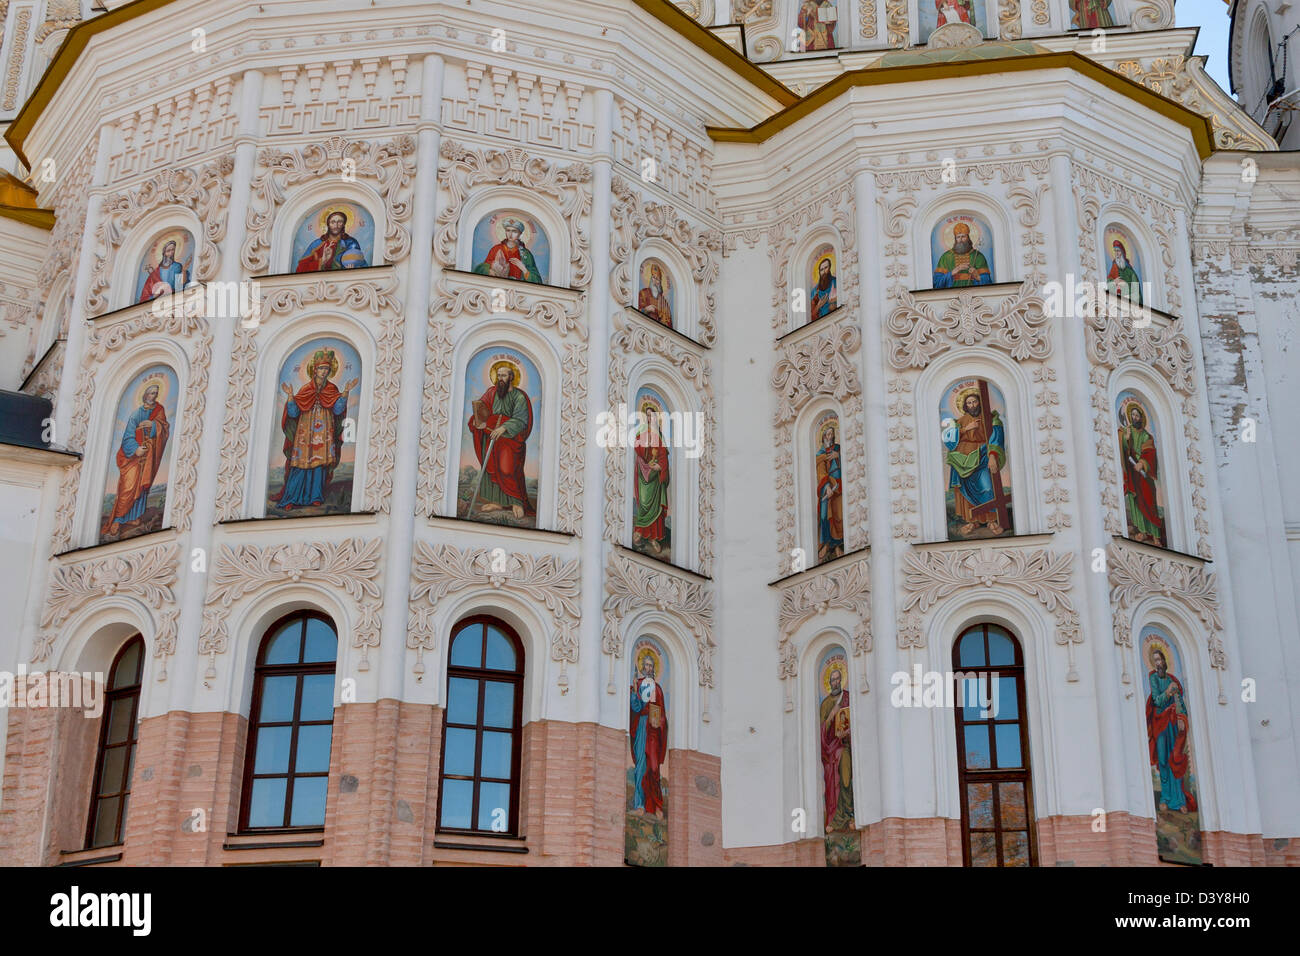 Fresco of Assumption cathedral in Pecherskaya Lavra monastery - religious edifice. Kiev, Ukraine. Stock Photo